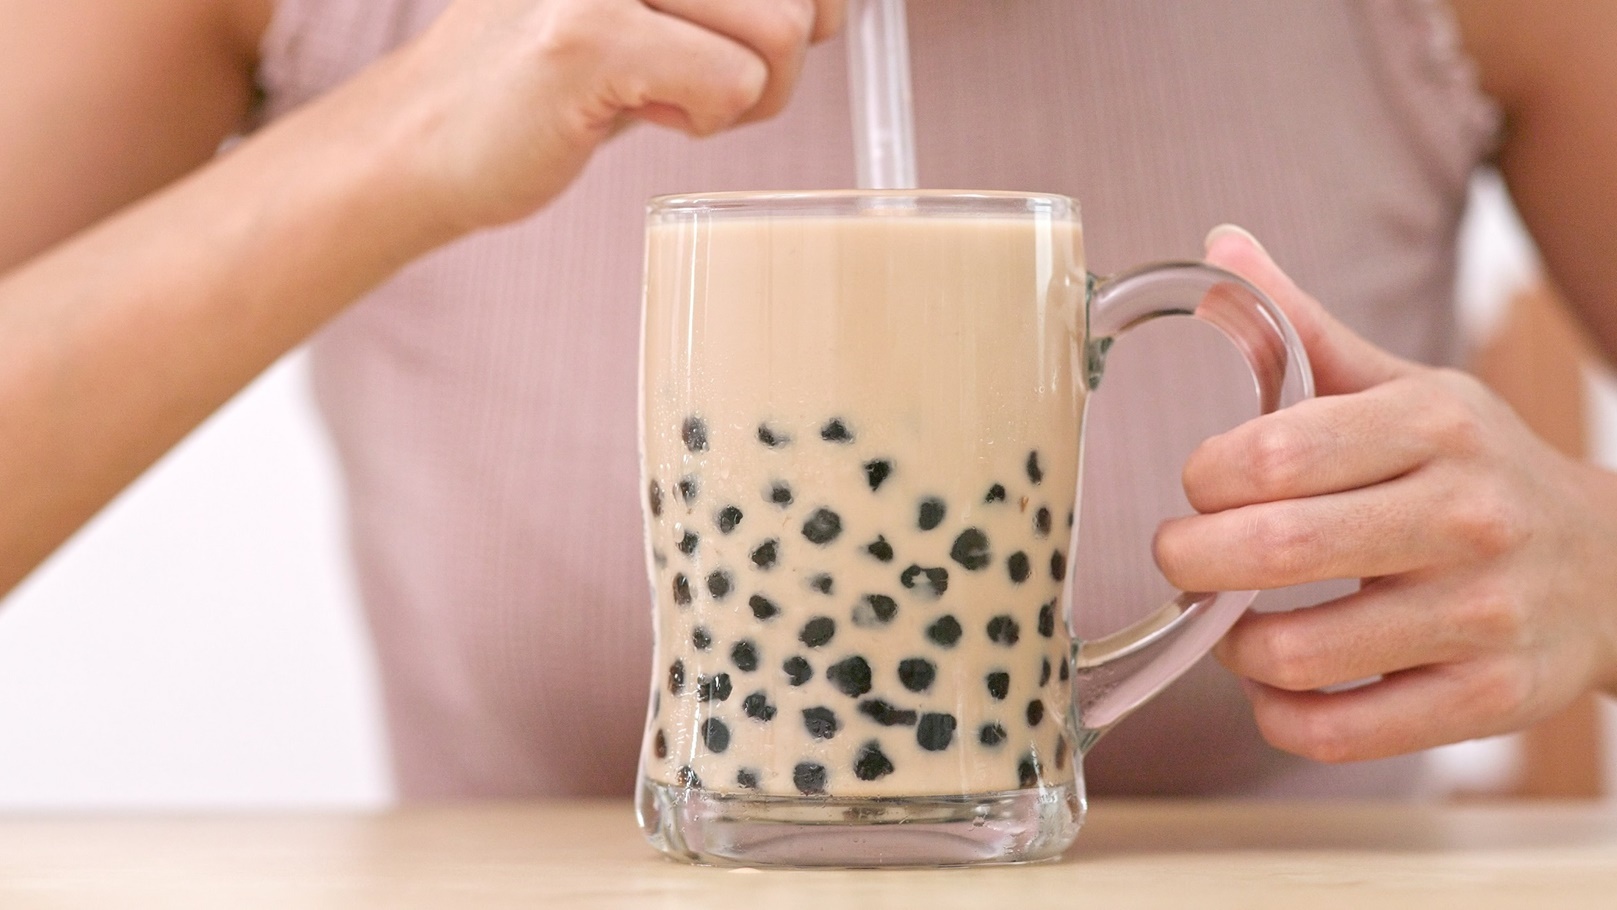 woman-drink-of-iced-bubble-milk-tea-2021-08-29-07-42-16-utc